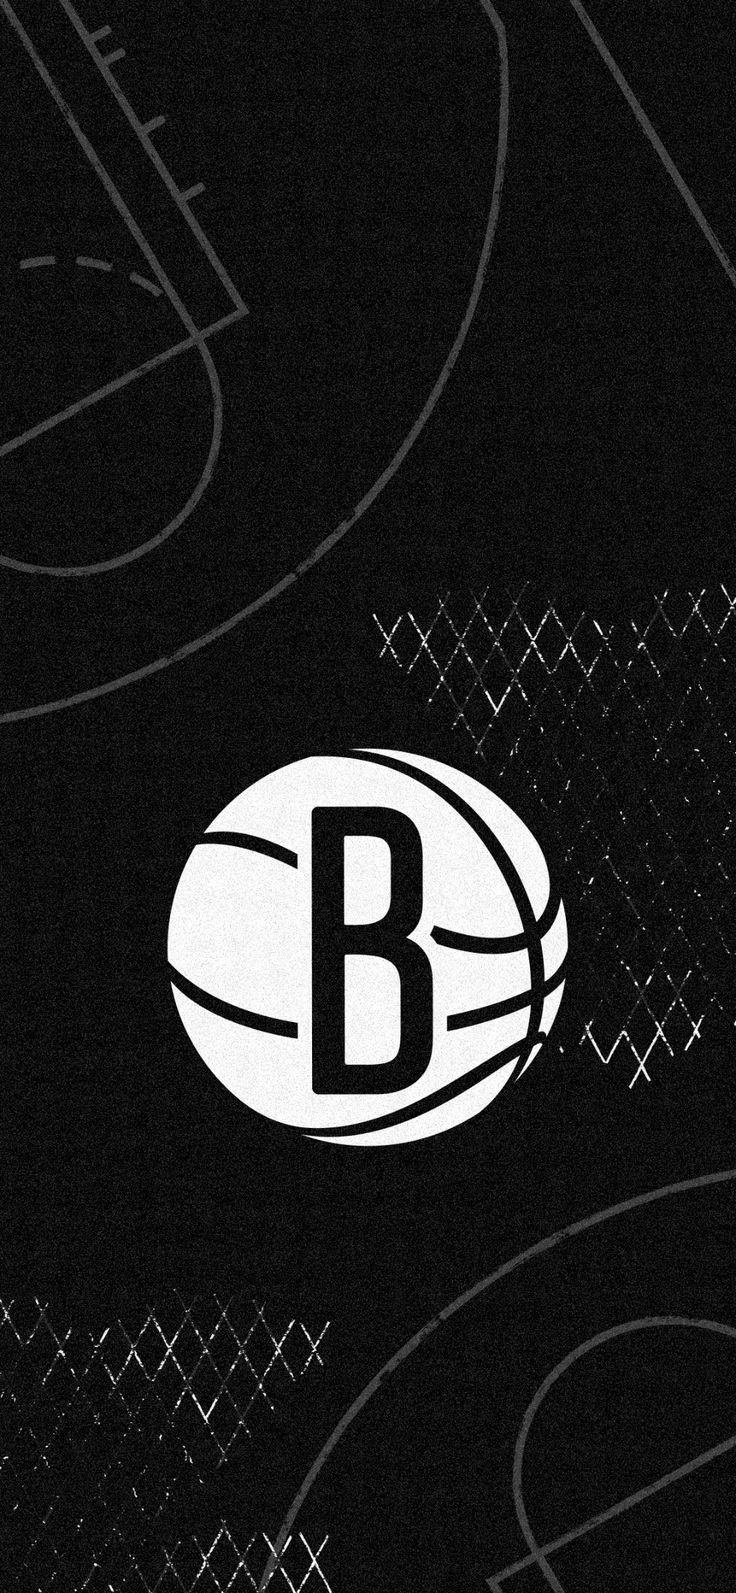 Brooklyn Nets on Brooklyn nets Nba wallpapers Irving